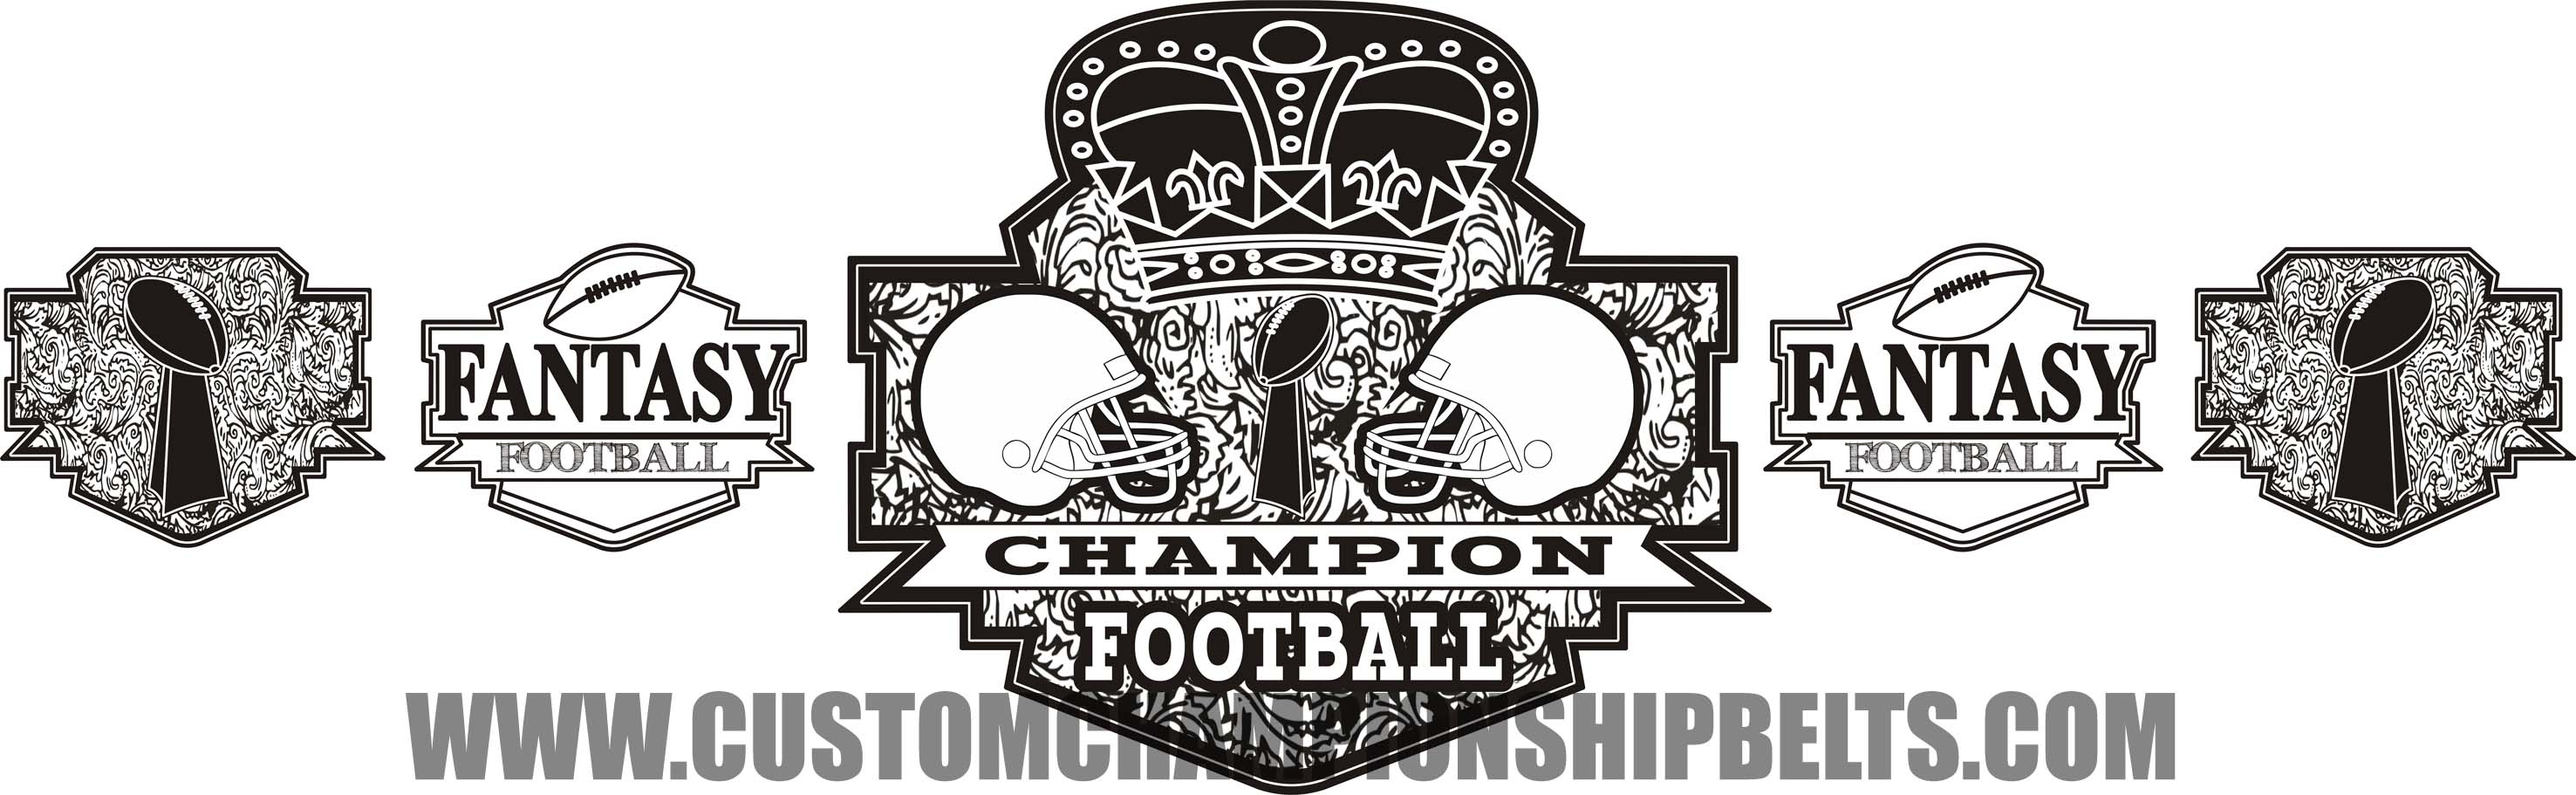 Wrestling Belt Designs Football Championship Belt